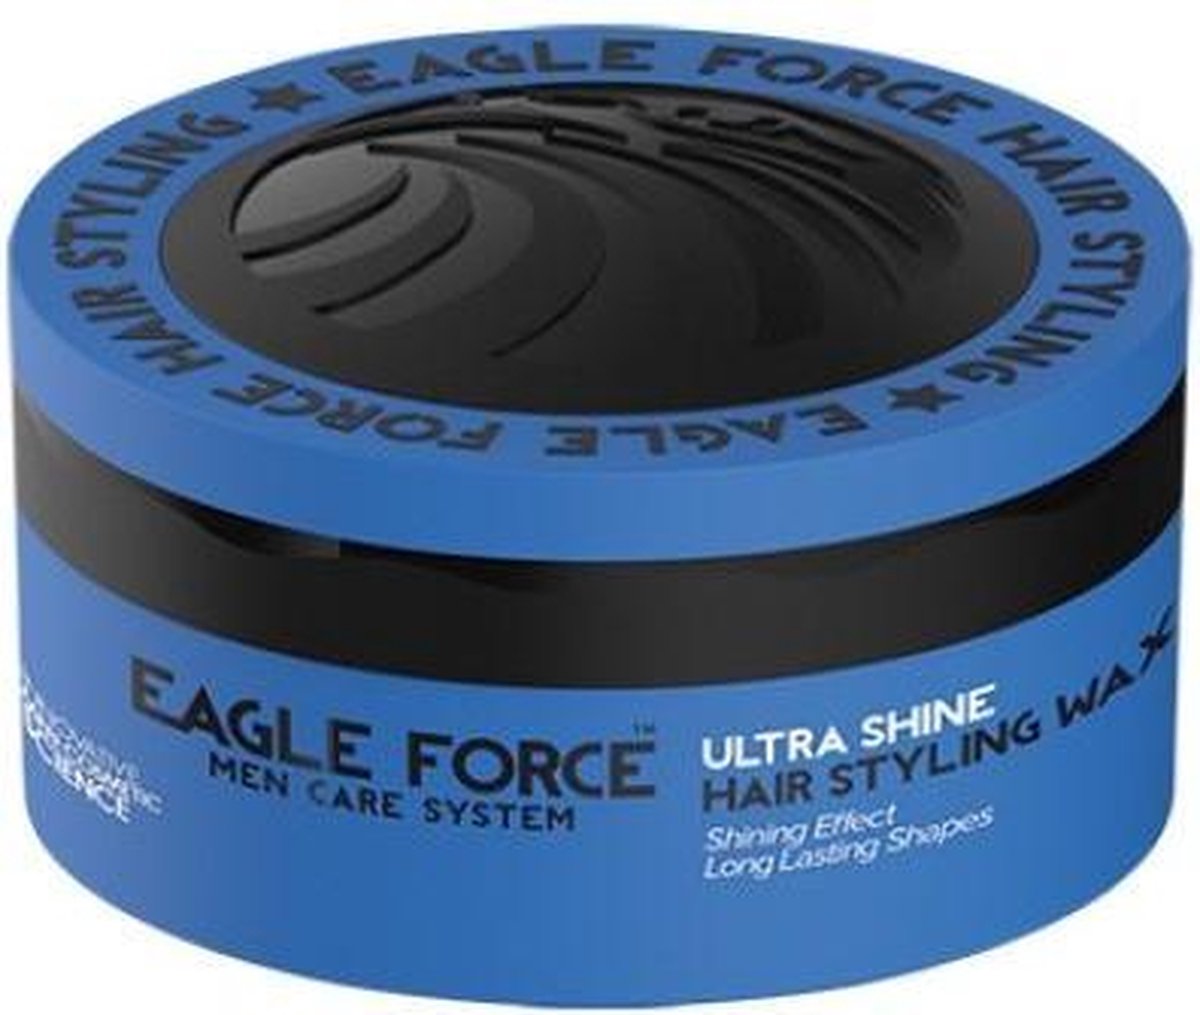 Eagle Force wax - ultra shine